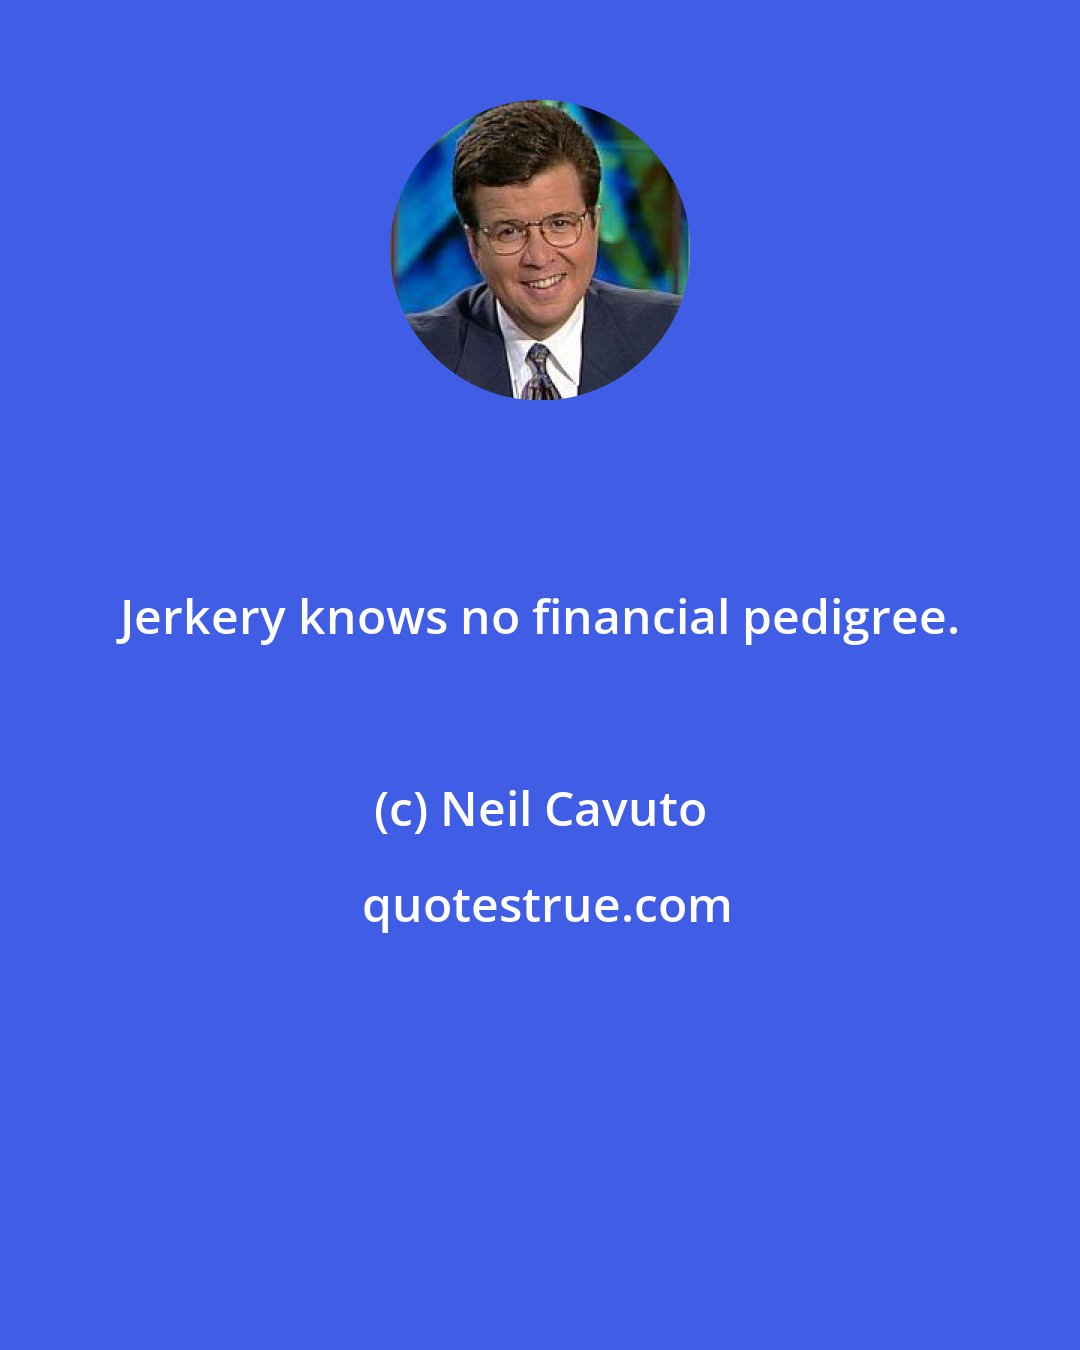 Neil Cavuto: Jerkery knows no financial pedigree.